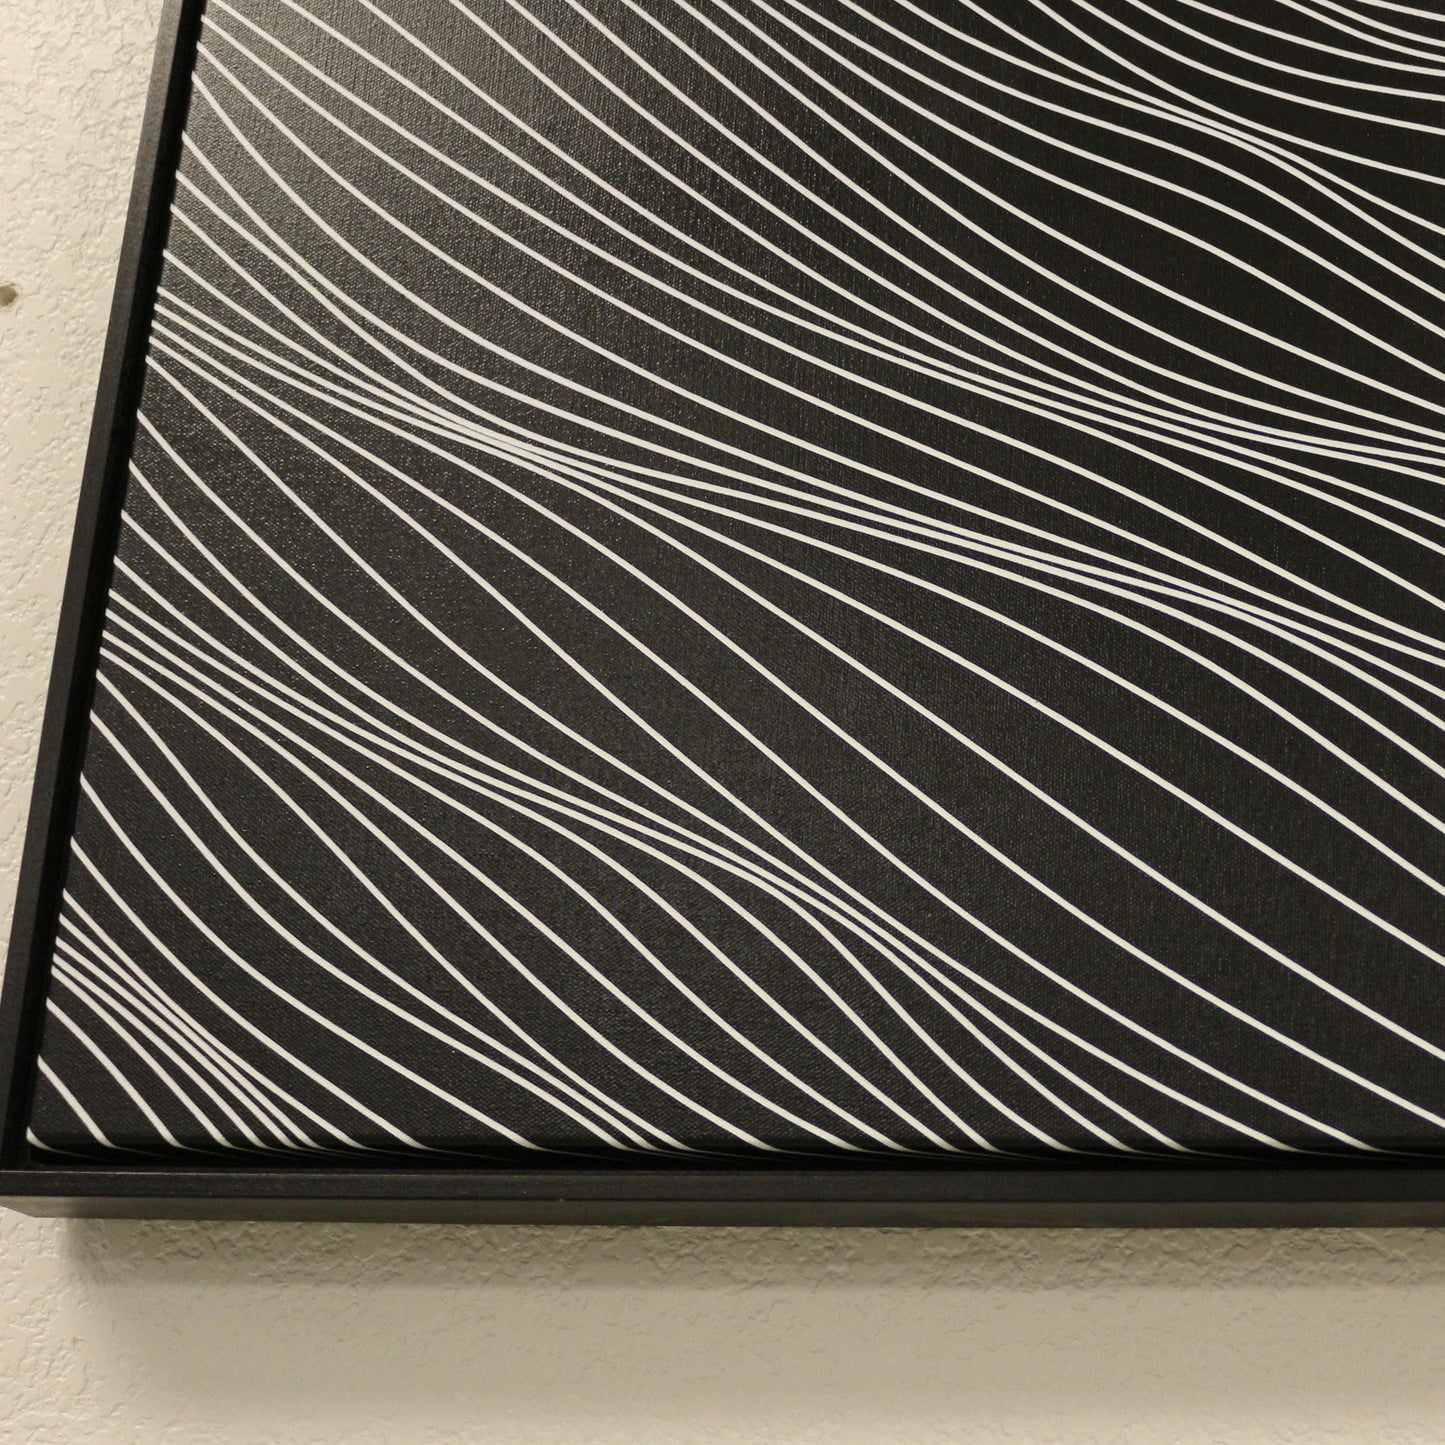 White on Black 2x3 feet B framed - Free Shipping in USA